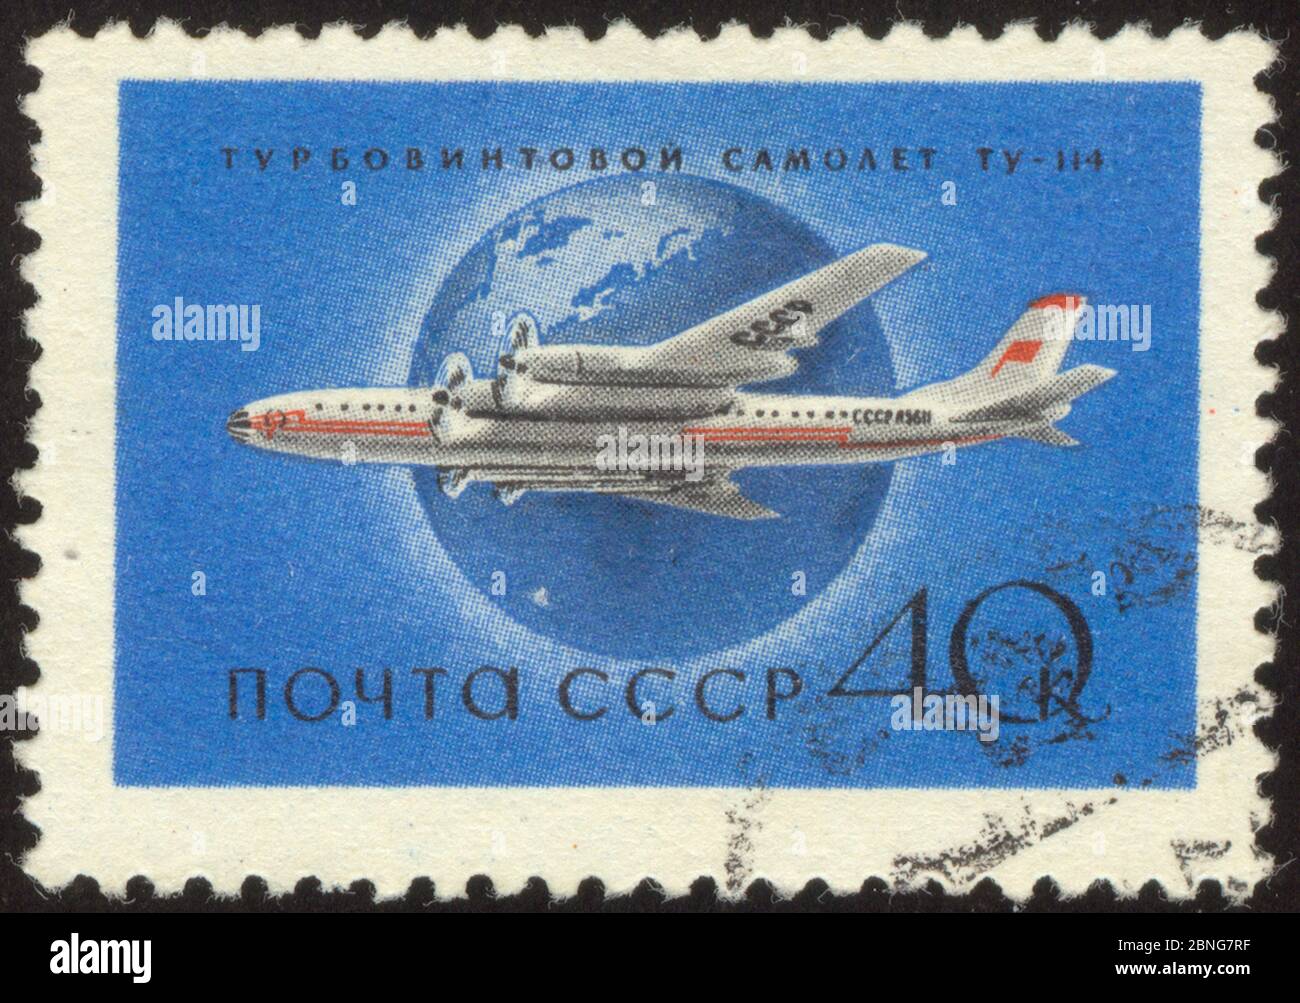 The scanned stamp. The Soviet stamp. Soviet plane TU-114. Stock Photo